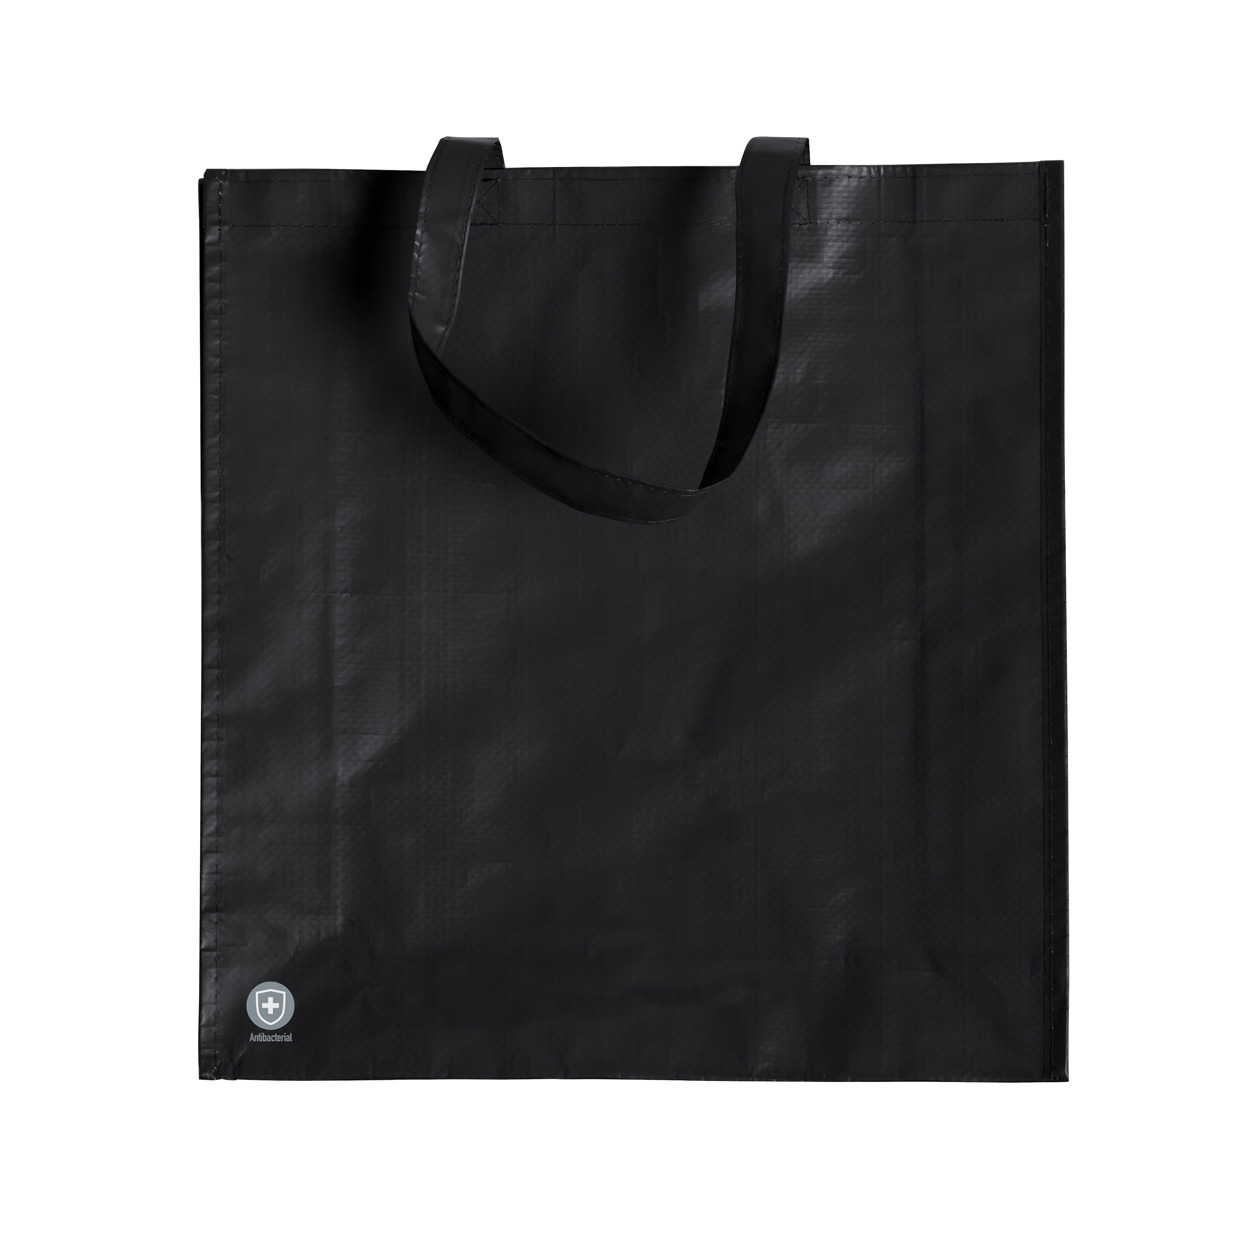 Kiarax antibacterial shopping bag - black